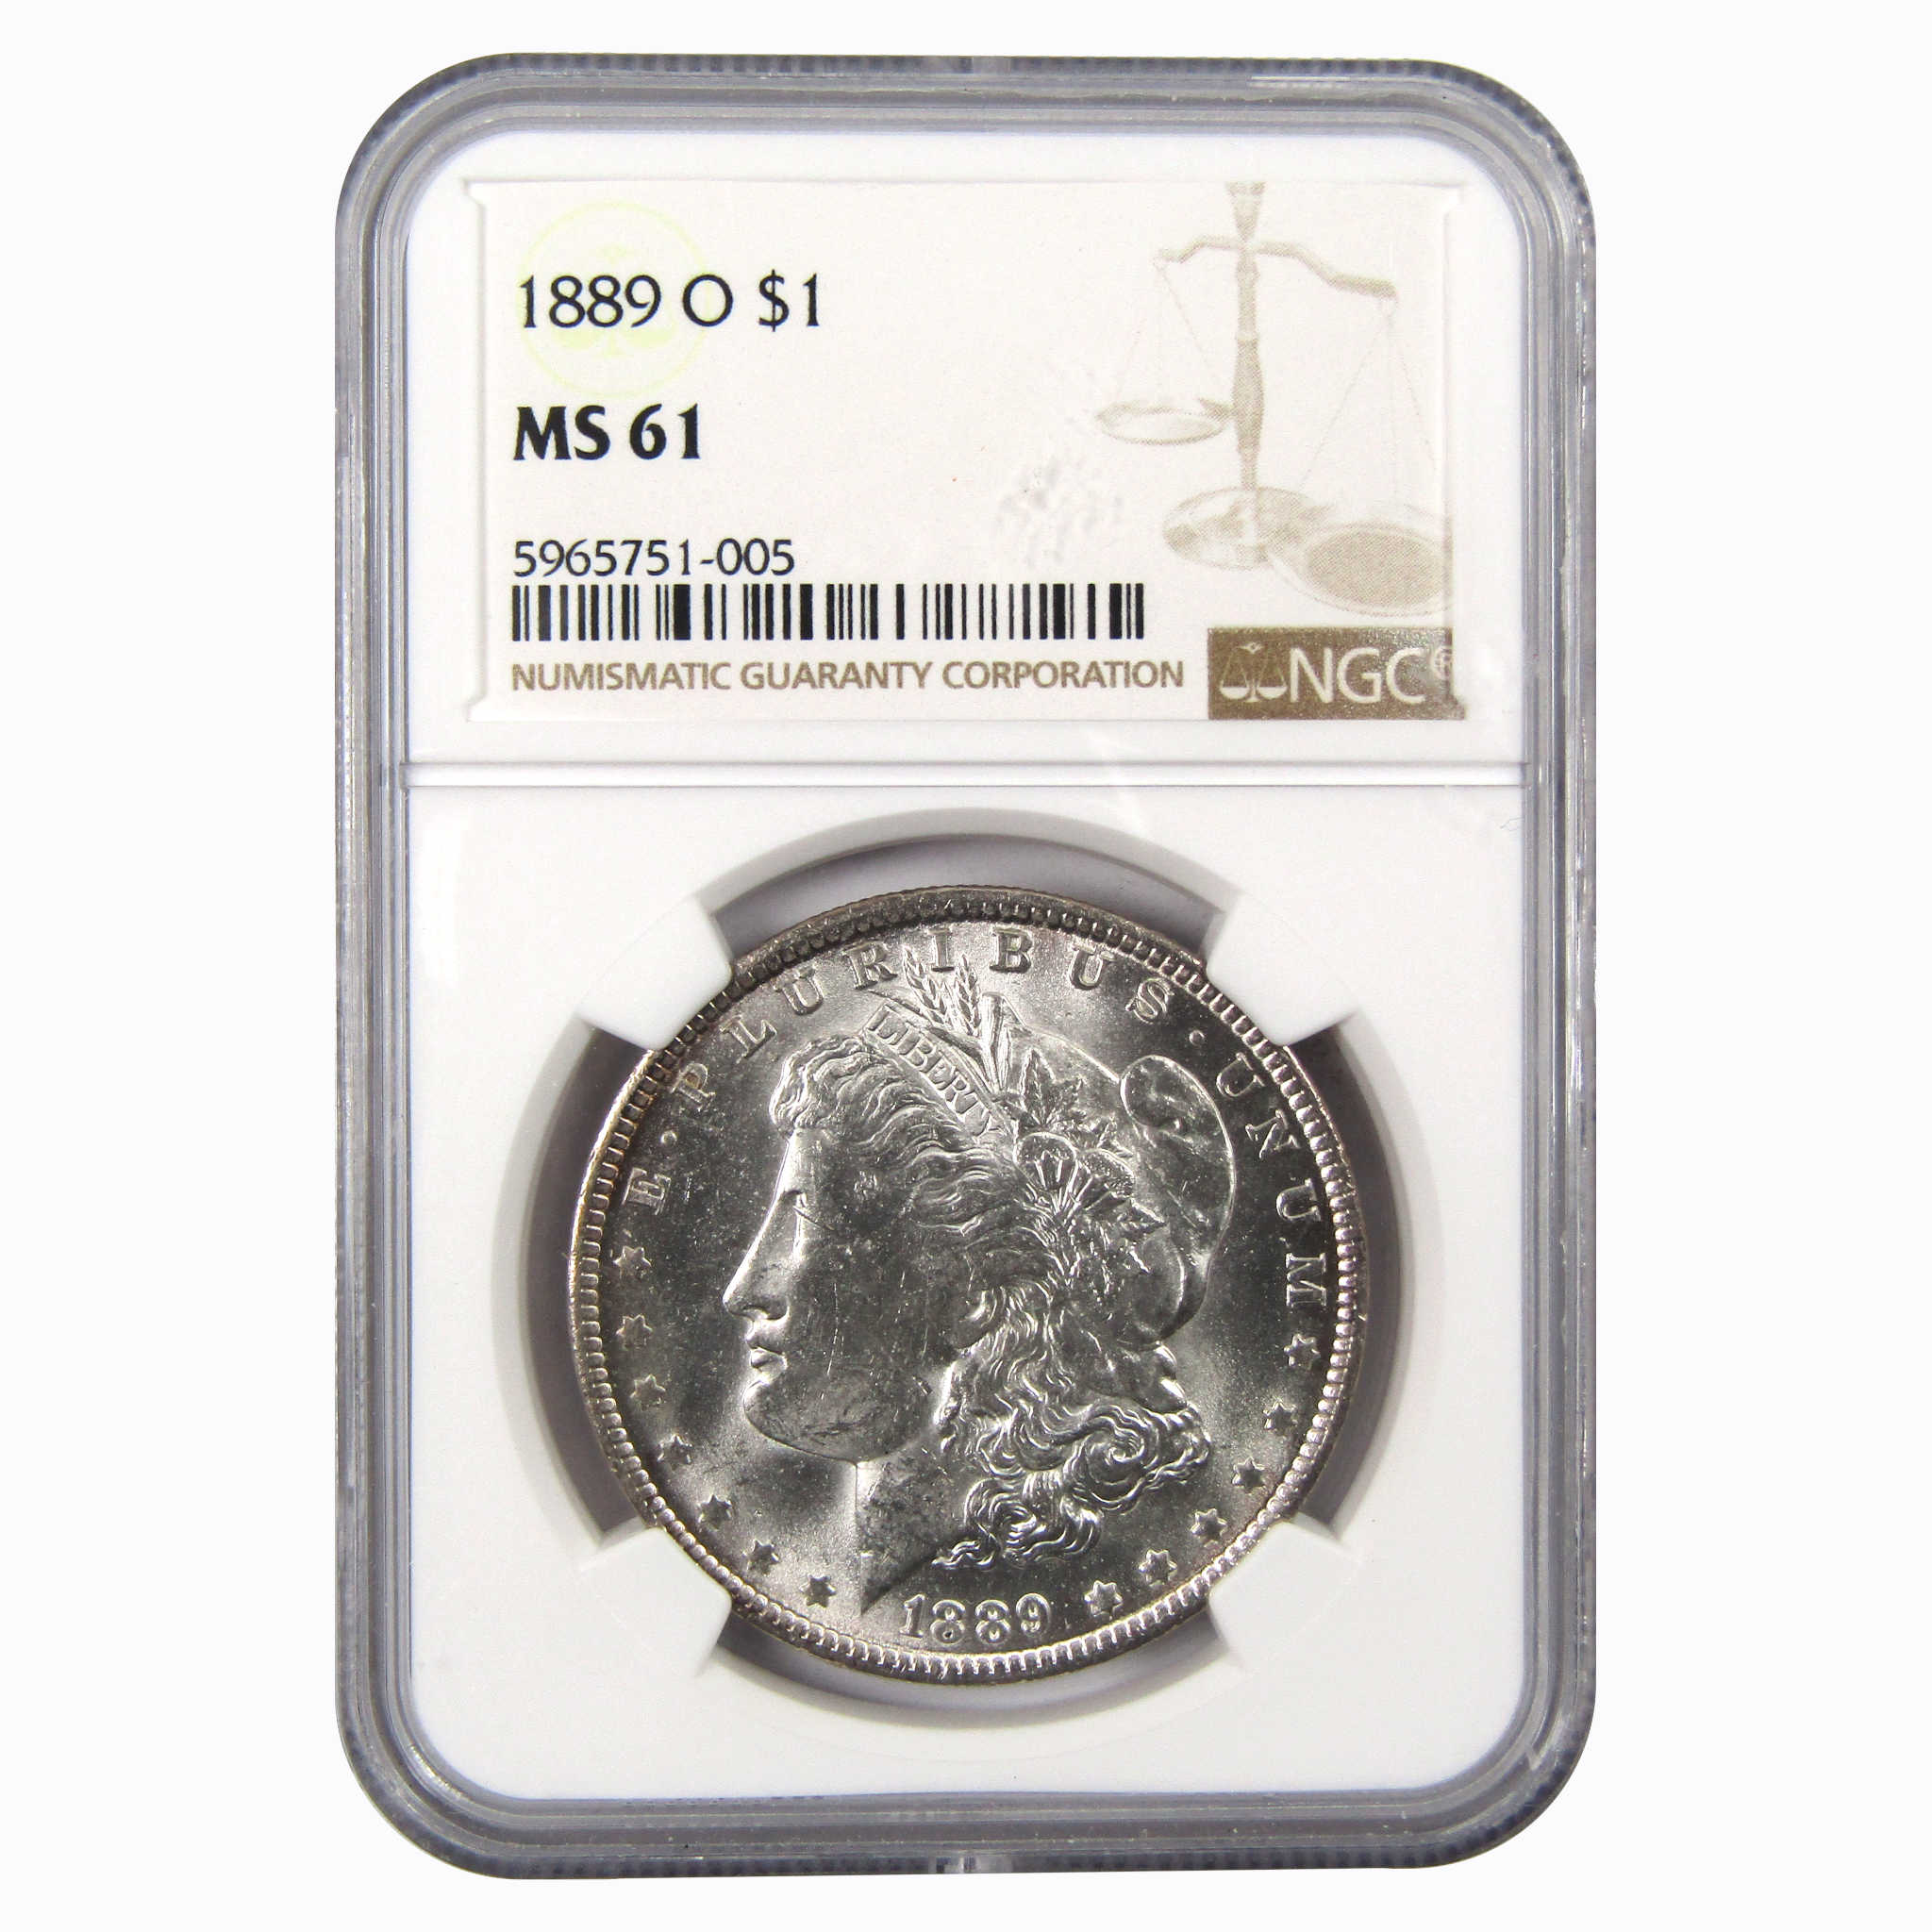 1889 O Morgan Dollar MS 61 NGC 90% Silver Uncirculated Coin SKU:I9839 - Morgan coin - Morgan silver dollar - Morgan silver dollar for sale - Profile Coins &amp; Collectibles